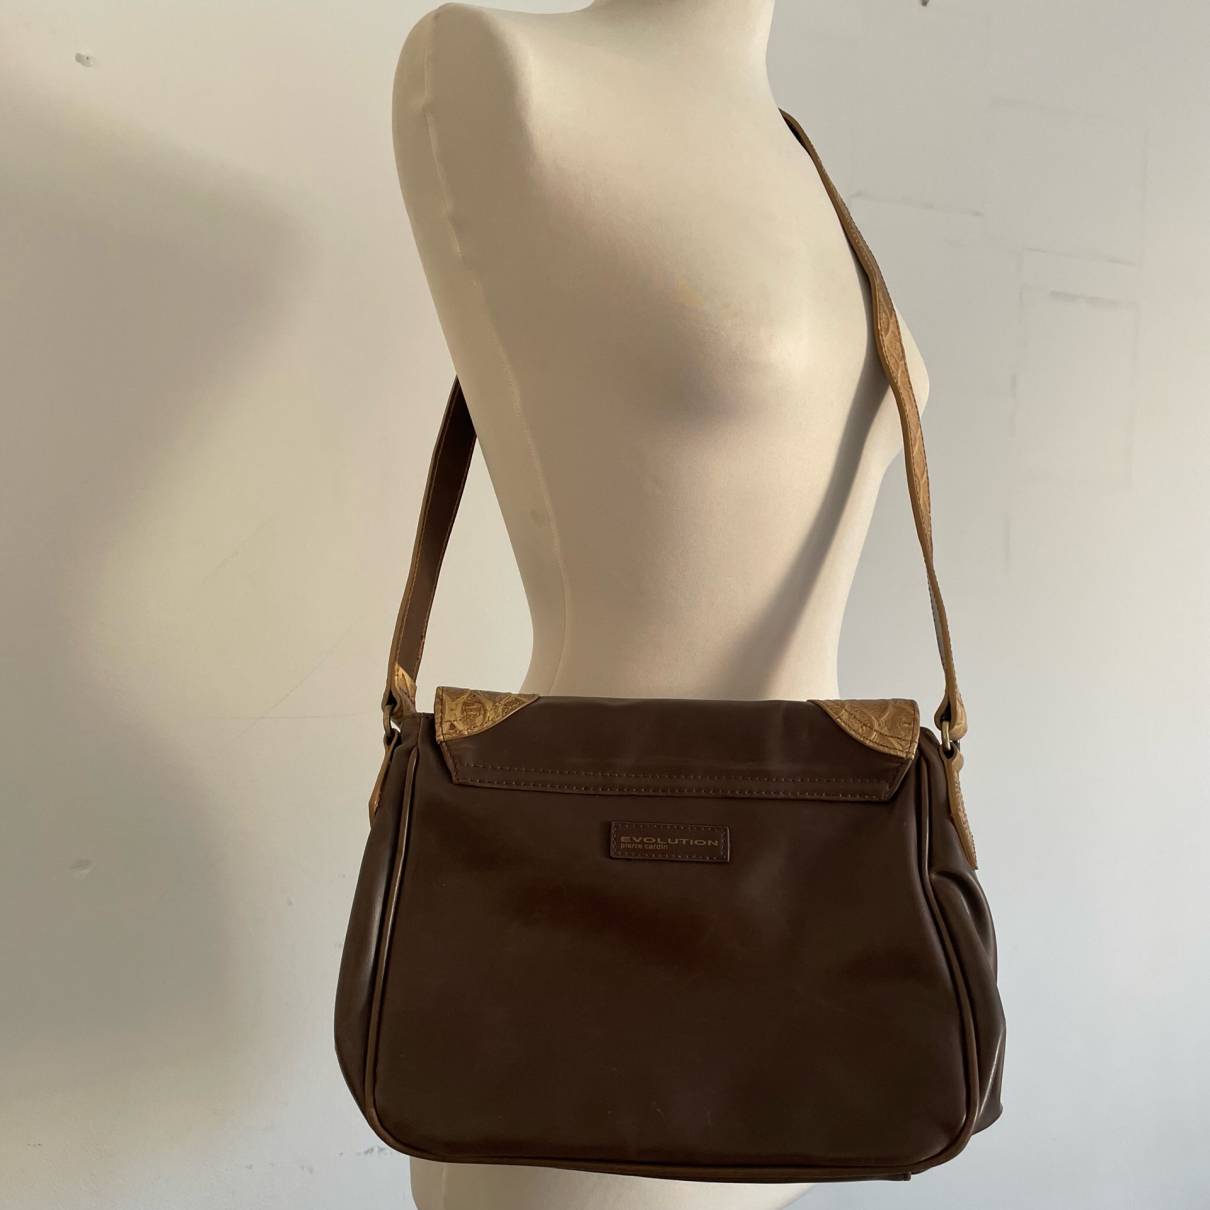 Leather handbag Pierre Cardin